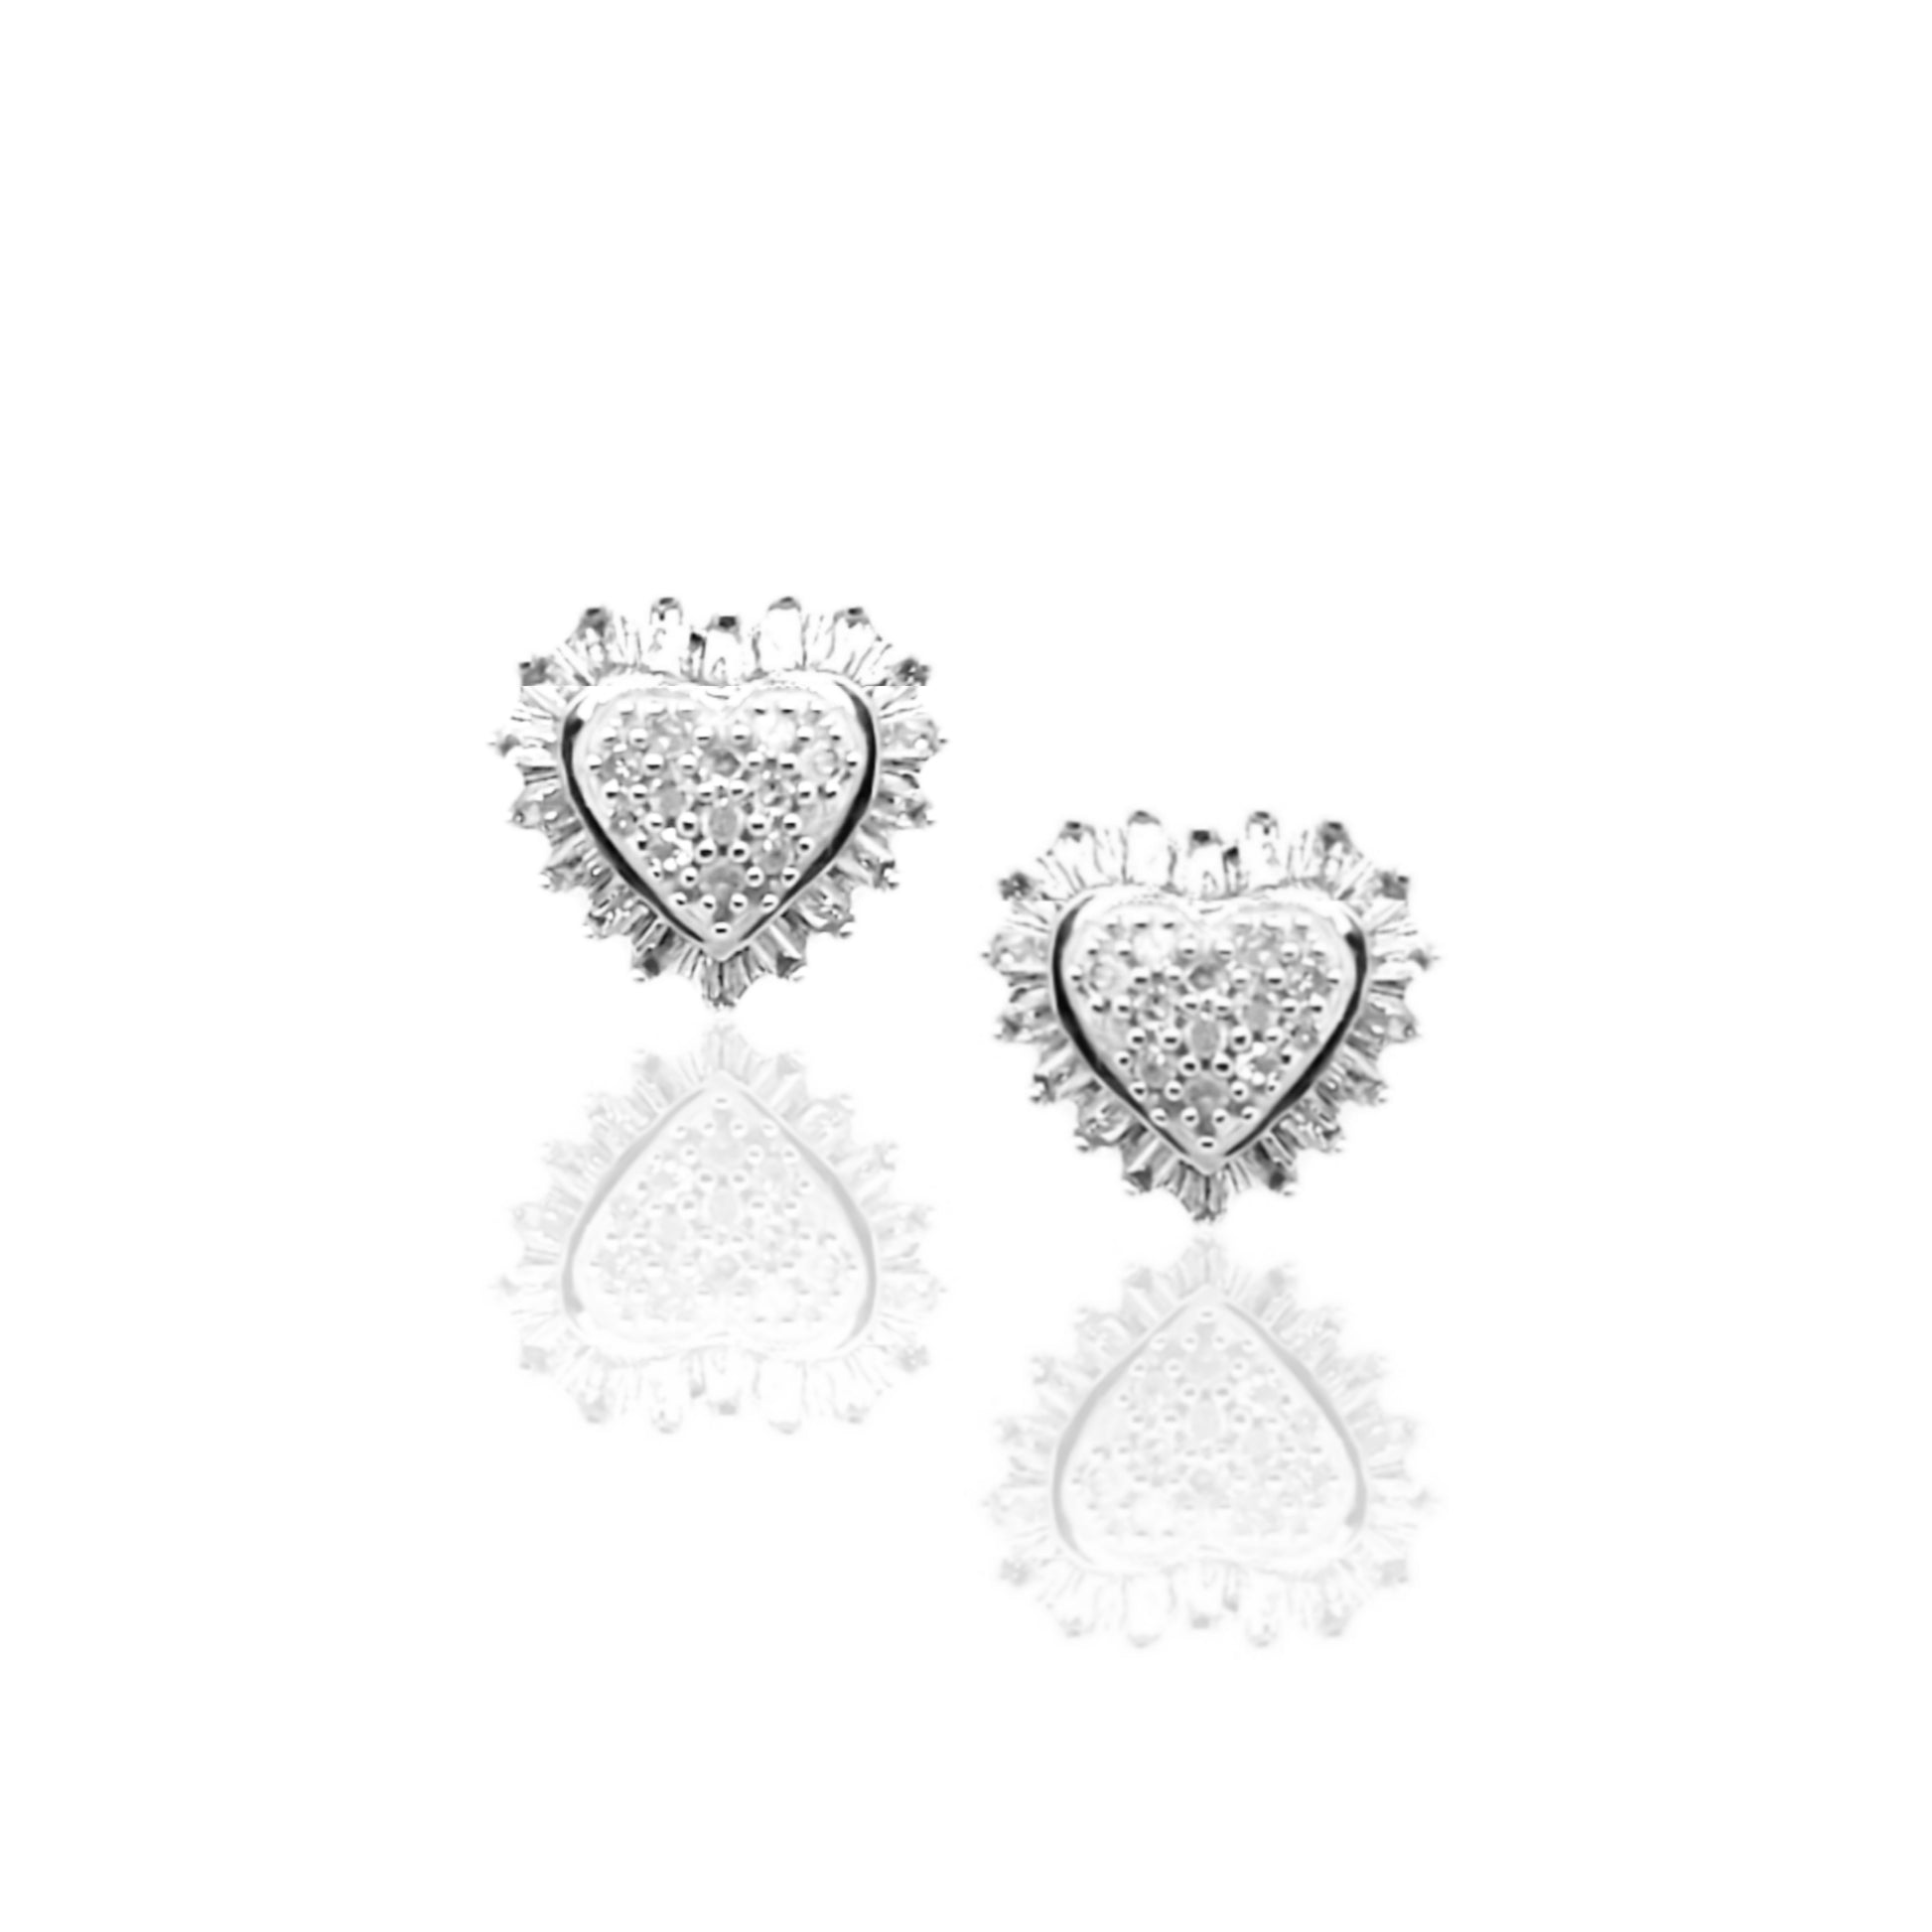 10K Gold And Diamond Heart Stud Earrings - HK Jewels